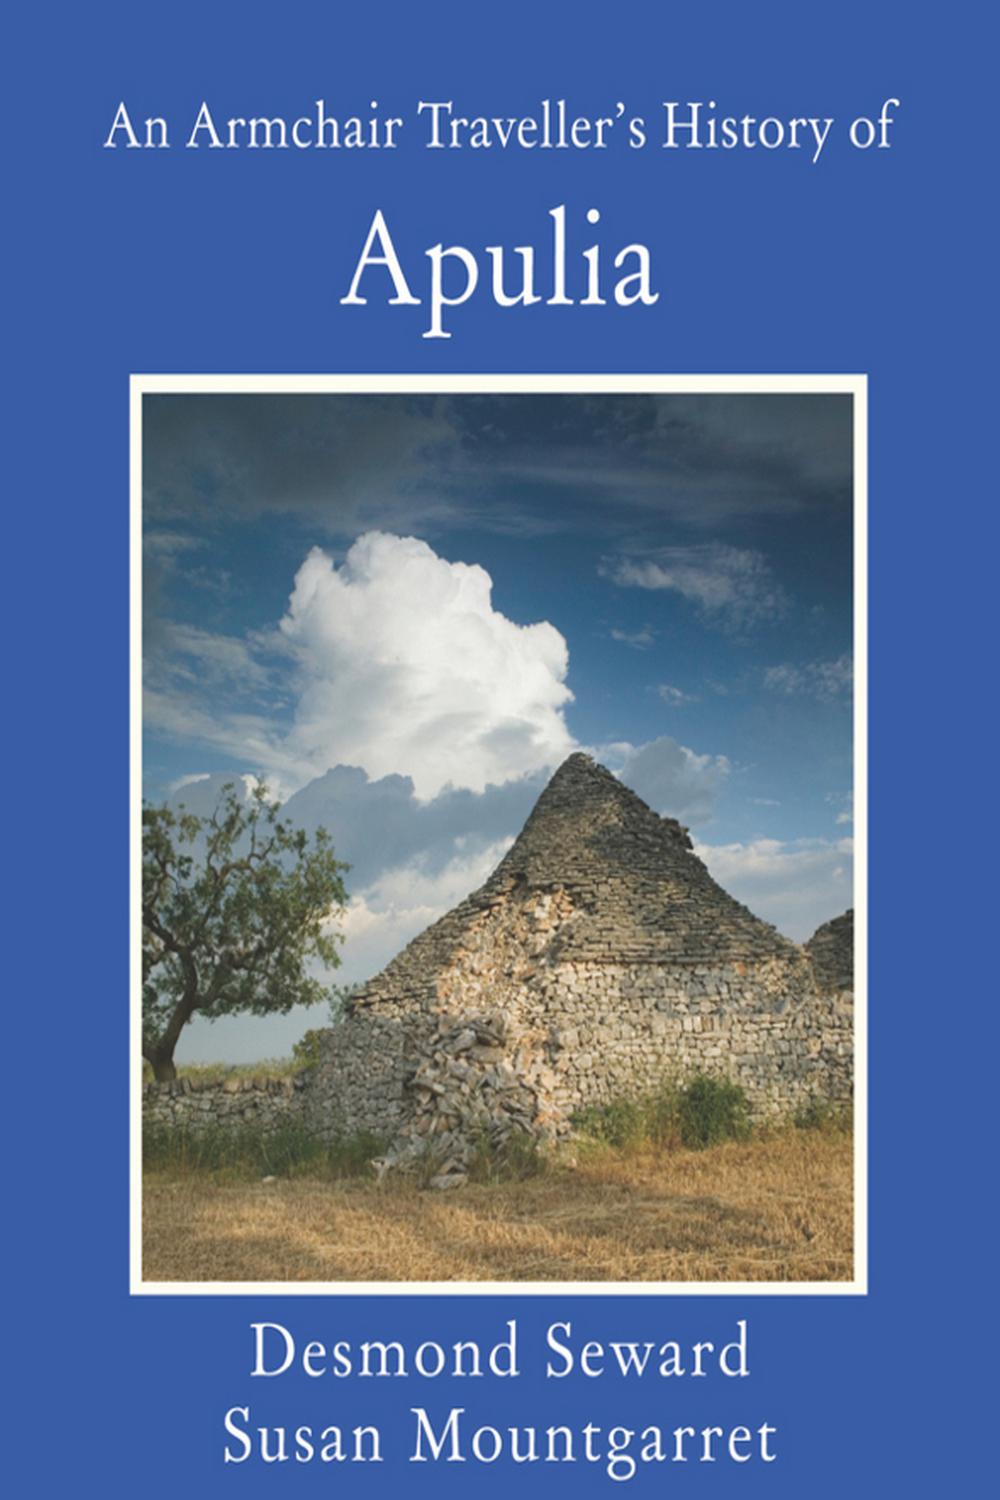 An Armchair Traveller's History of Apulia - Desmond Seward